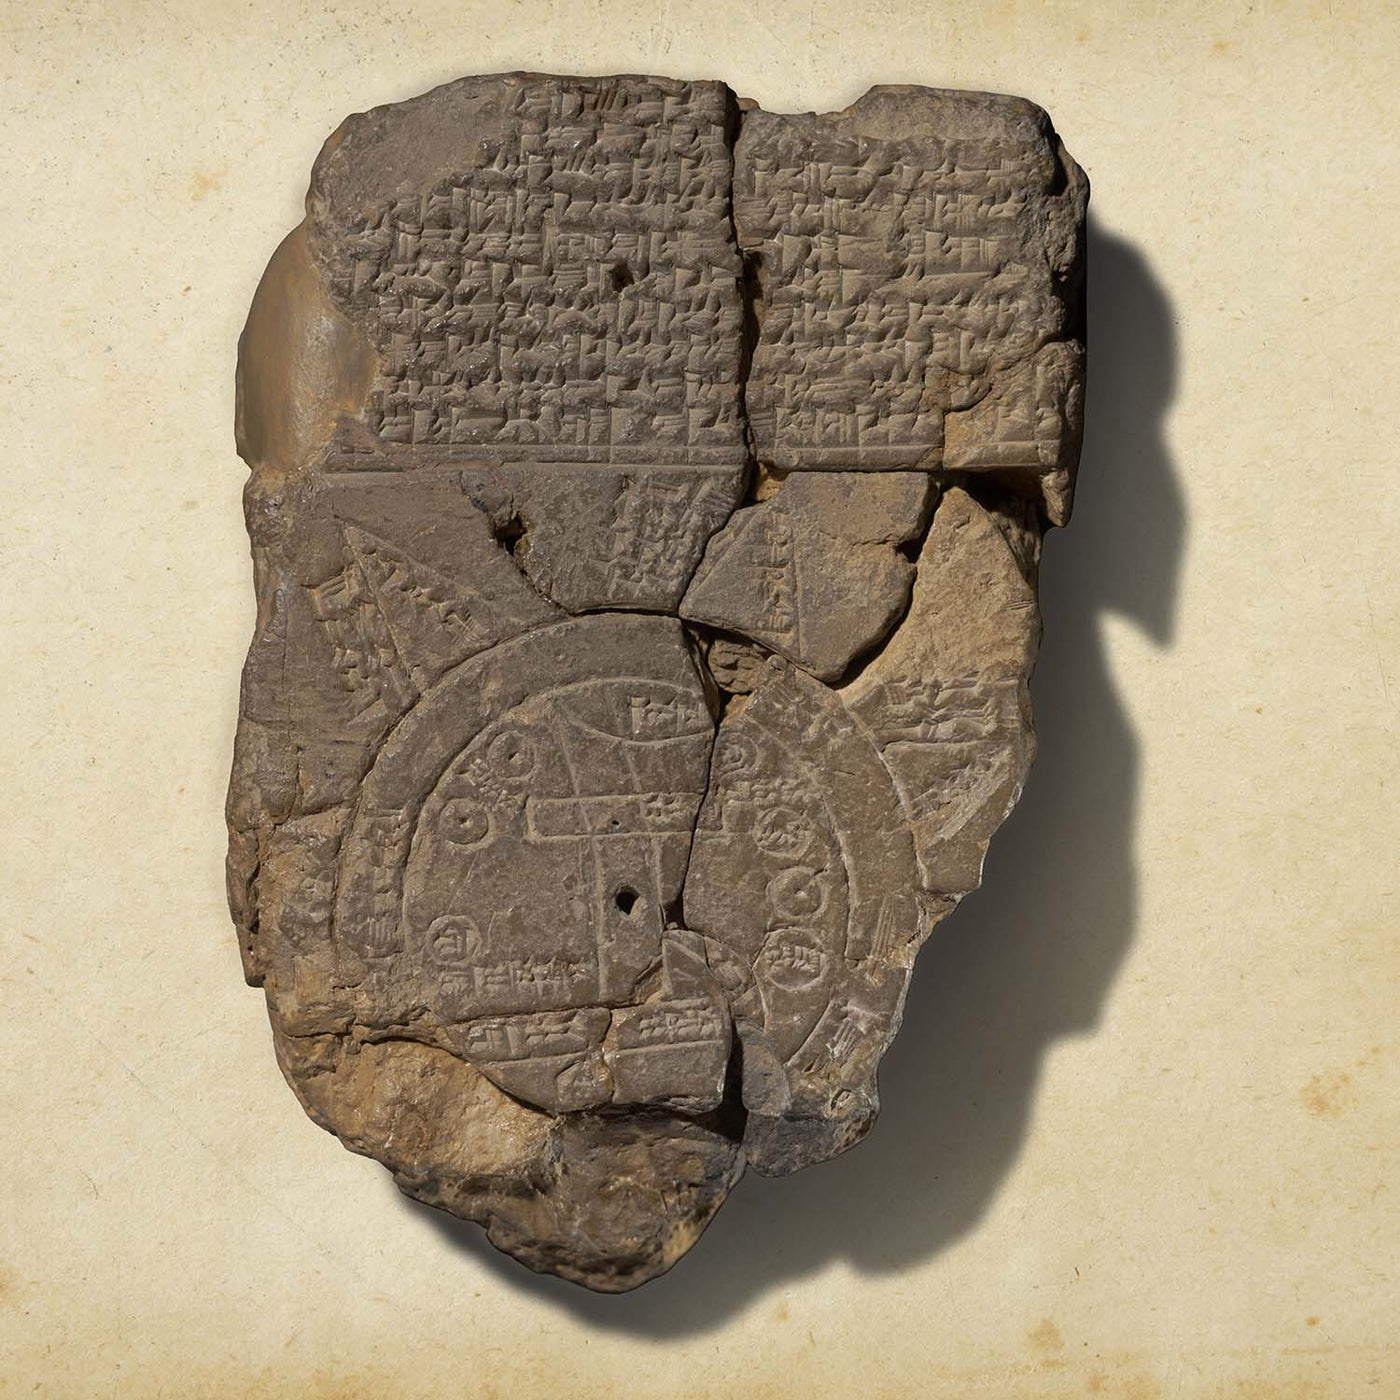 Ancienne carte thématique du monde antique, -600 : Babylone, Nil, mer Méditerranée, Gange, Himalaya